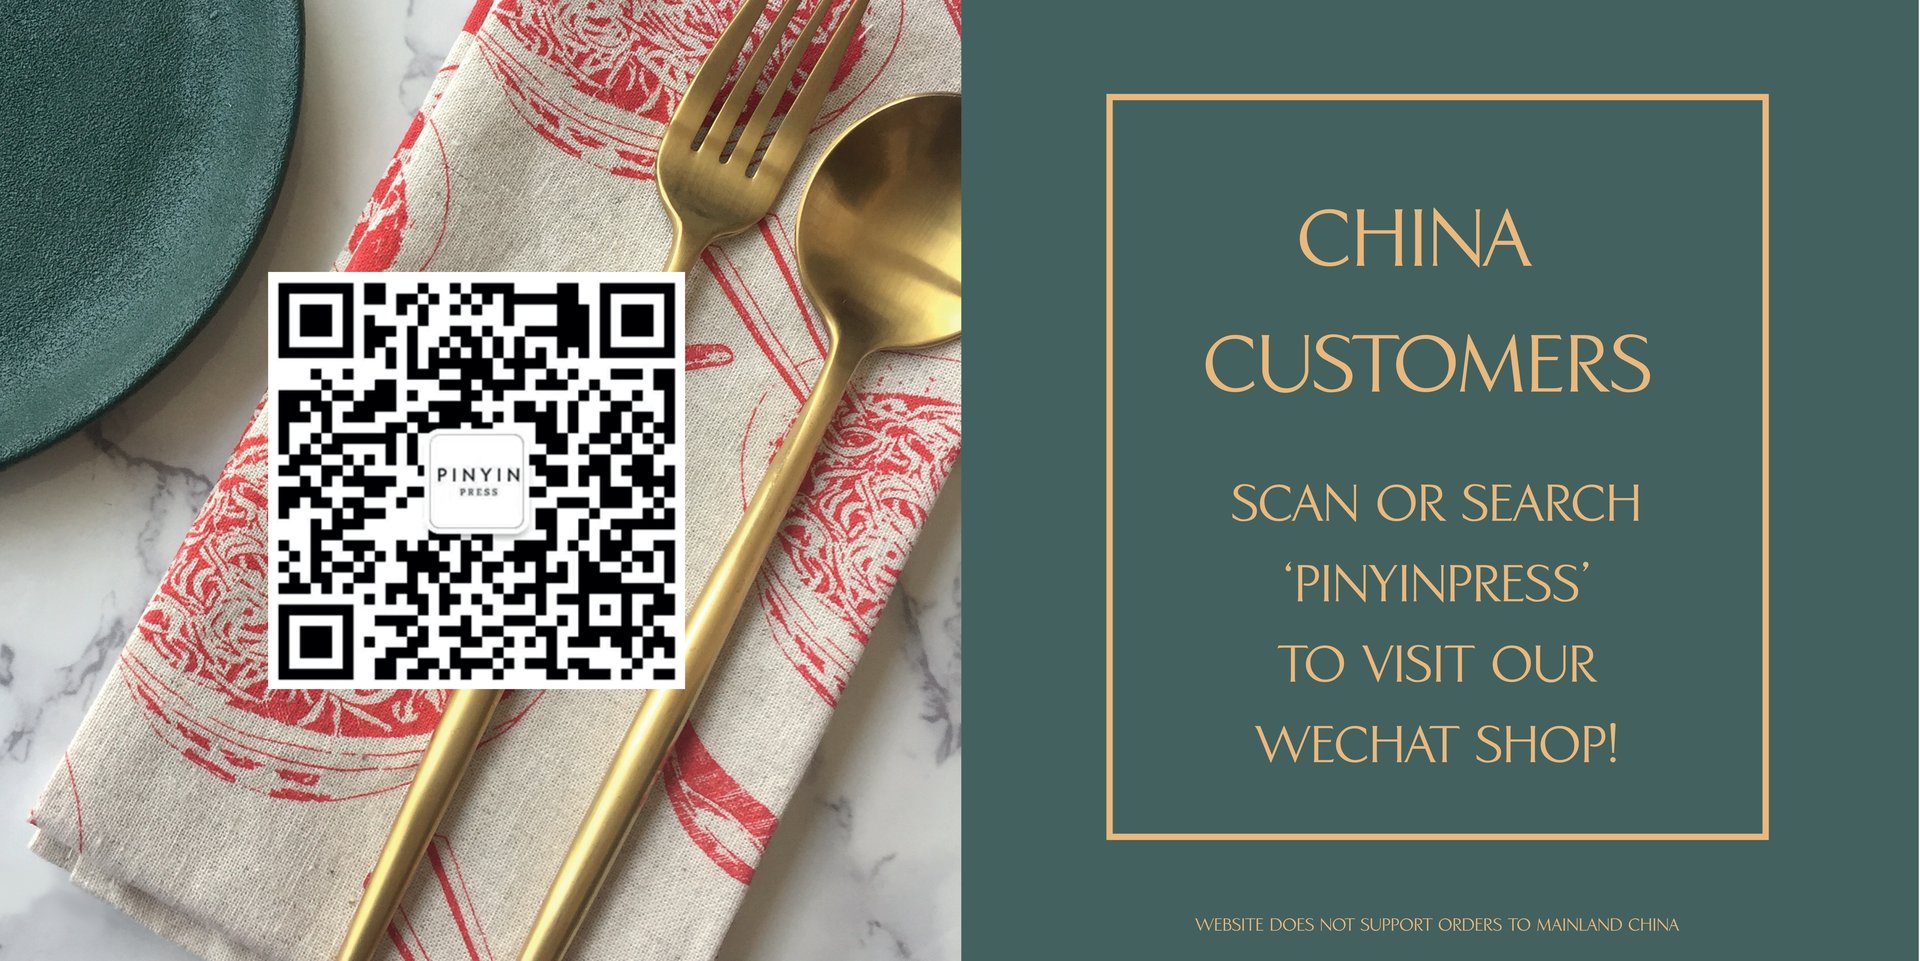 pinyin-press-qr-code-china-customers